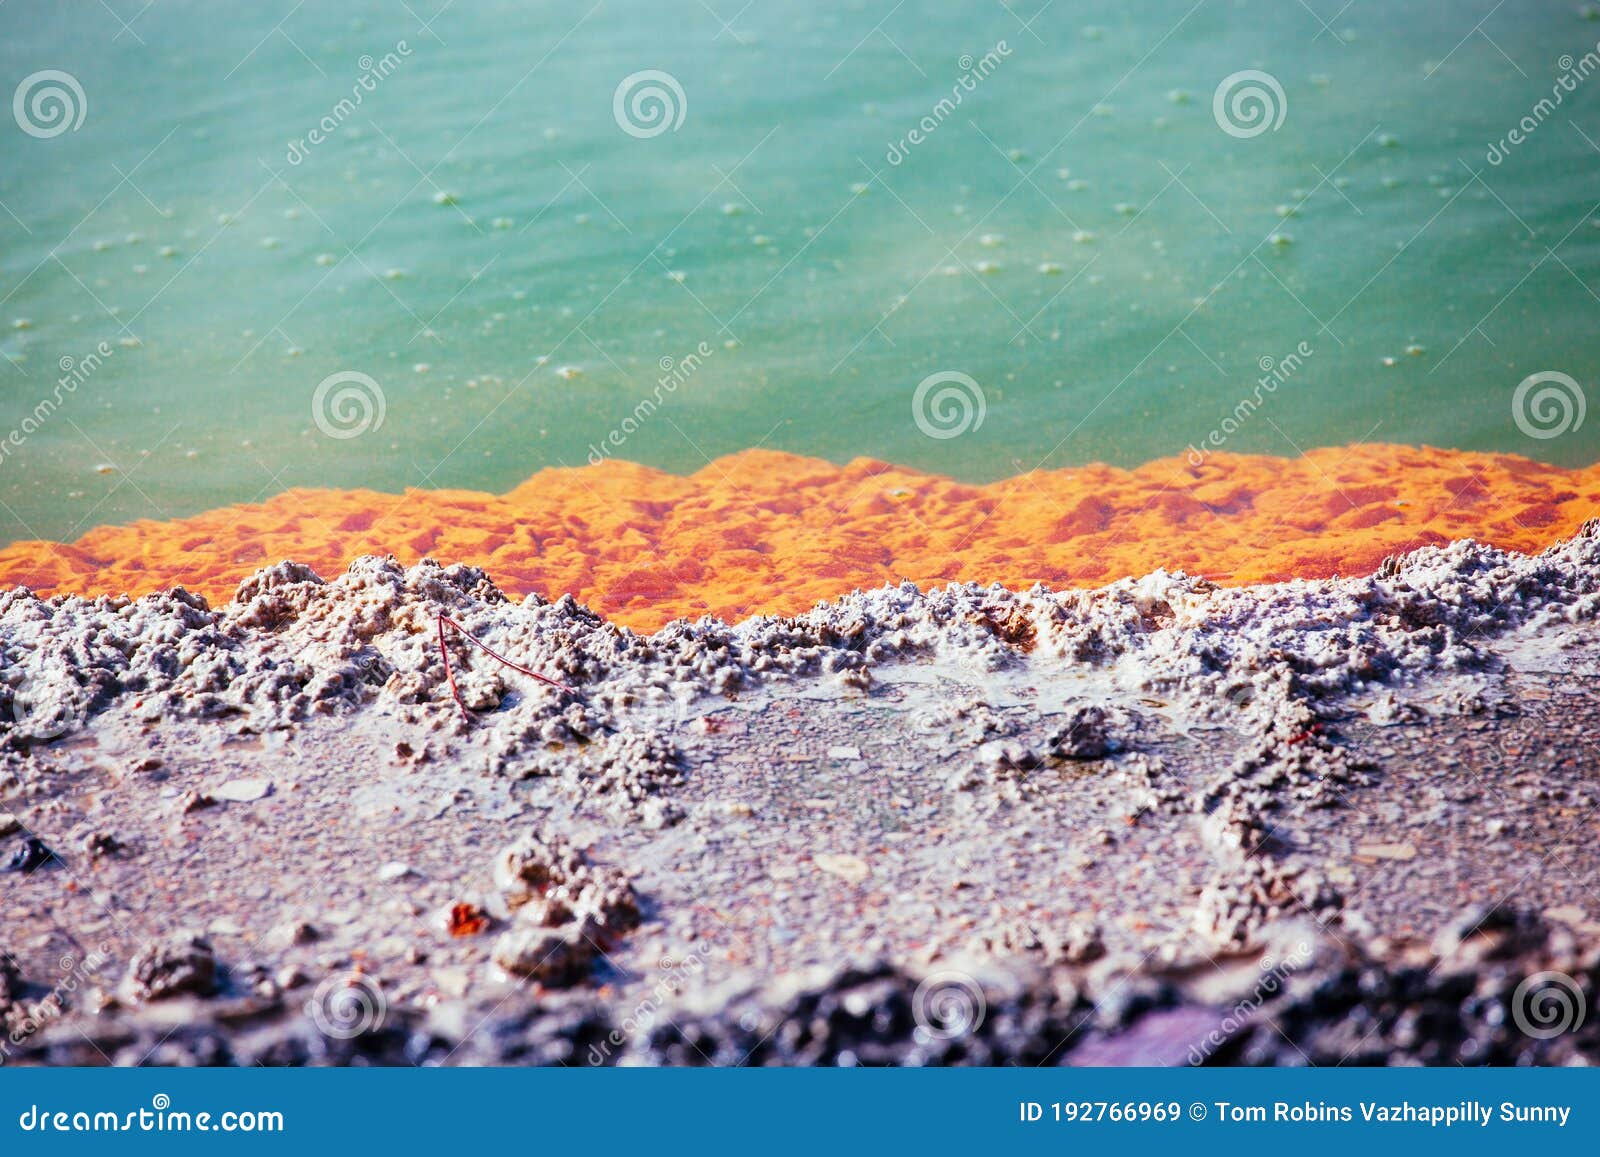 Geothermal Mud Pools Of Rotorua Nz Stock Image Image Of Lake